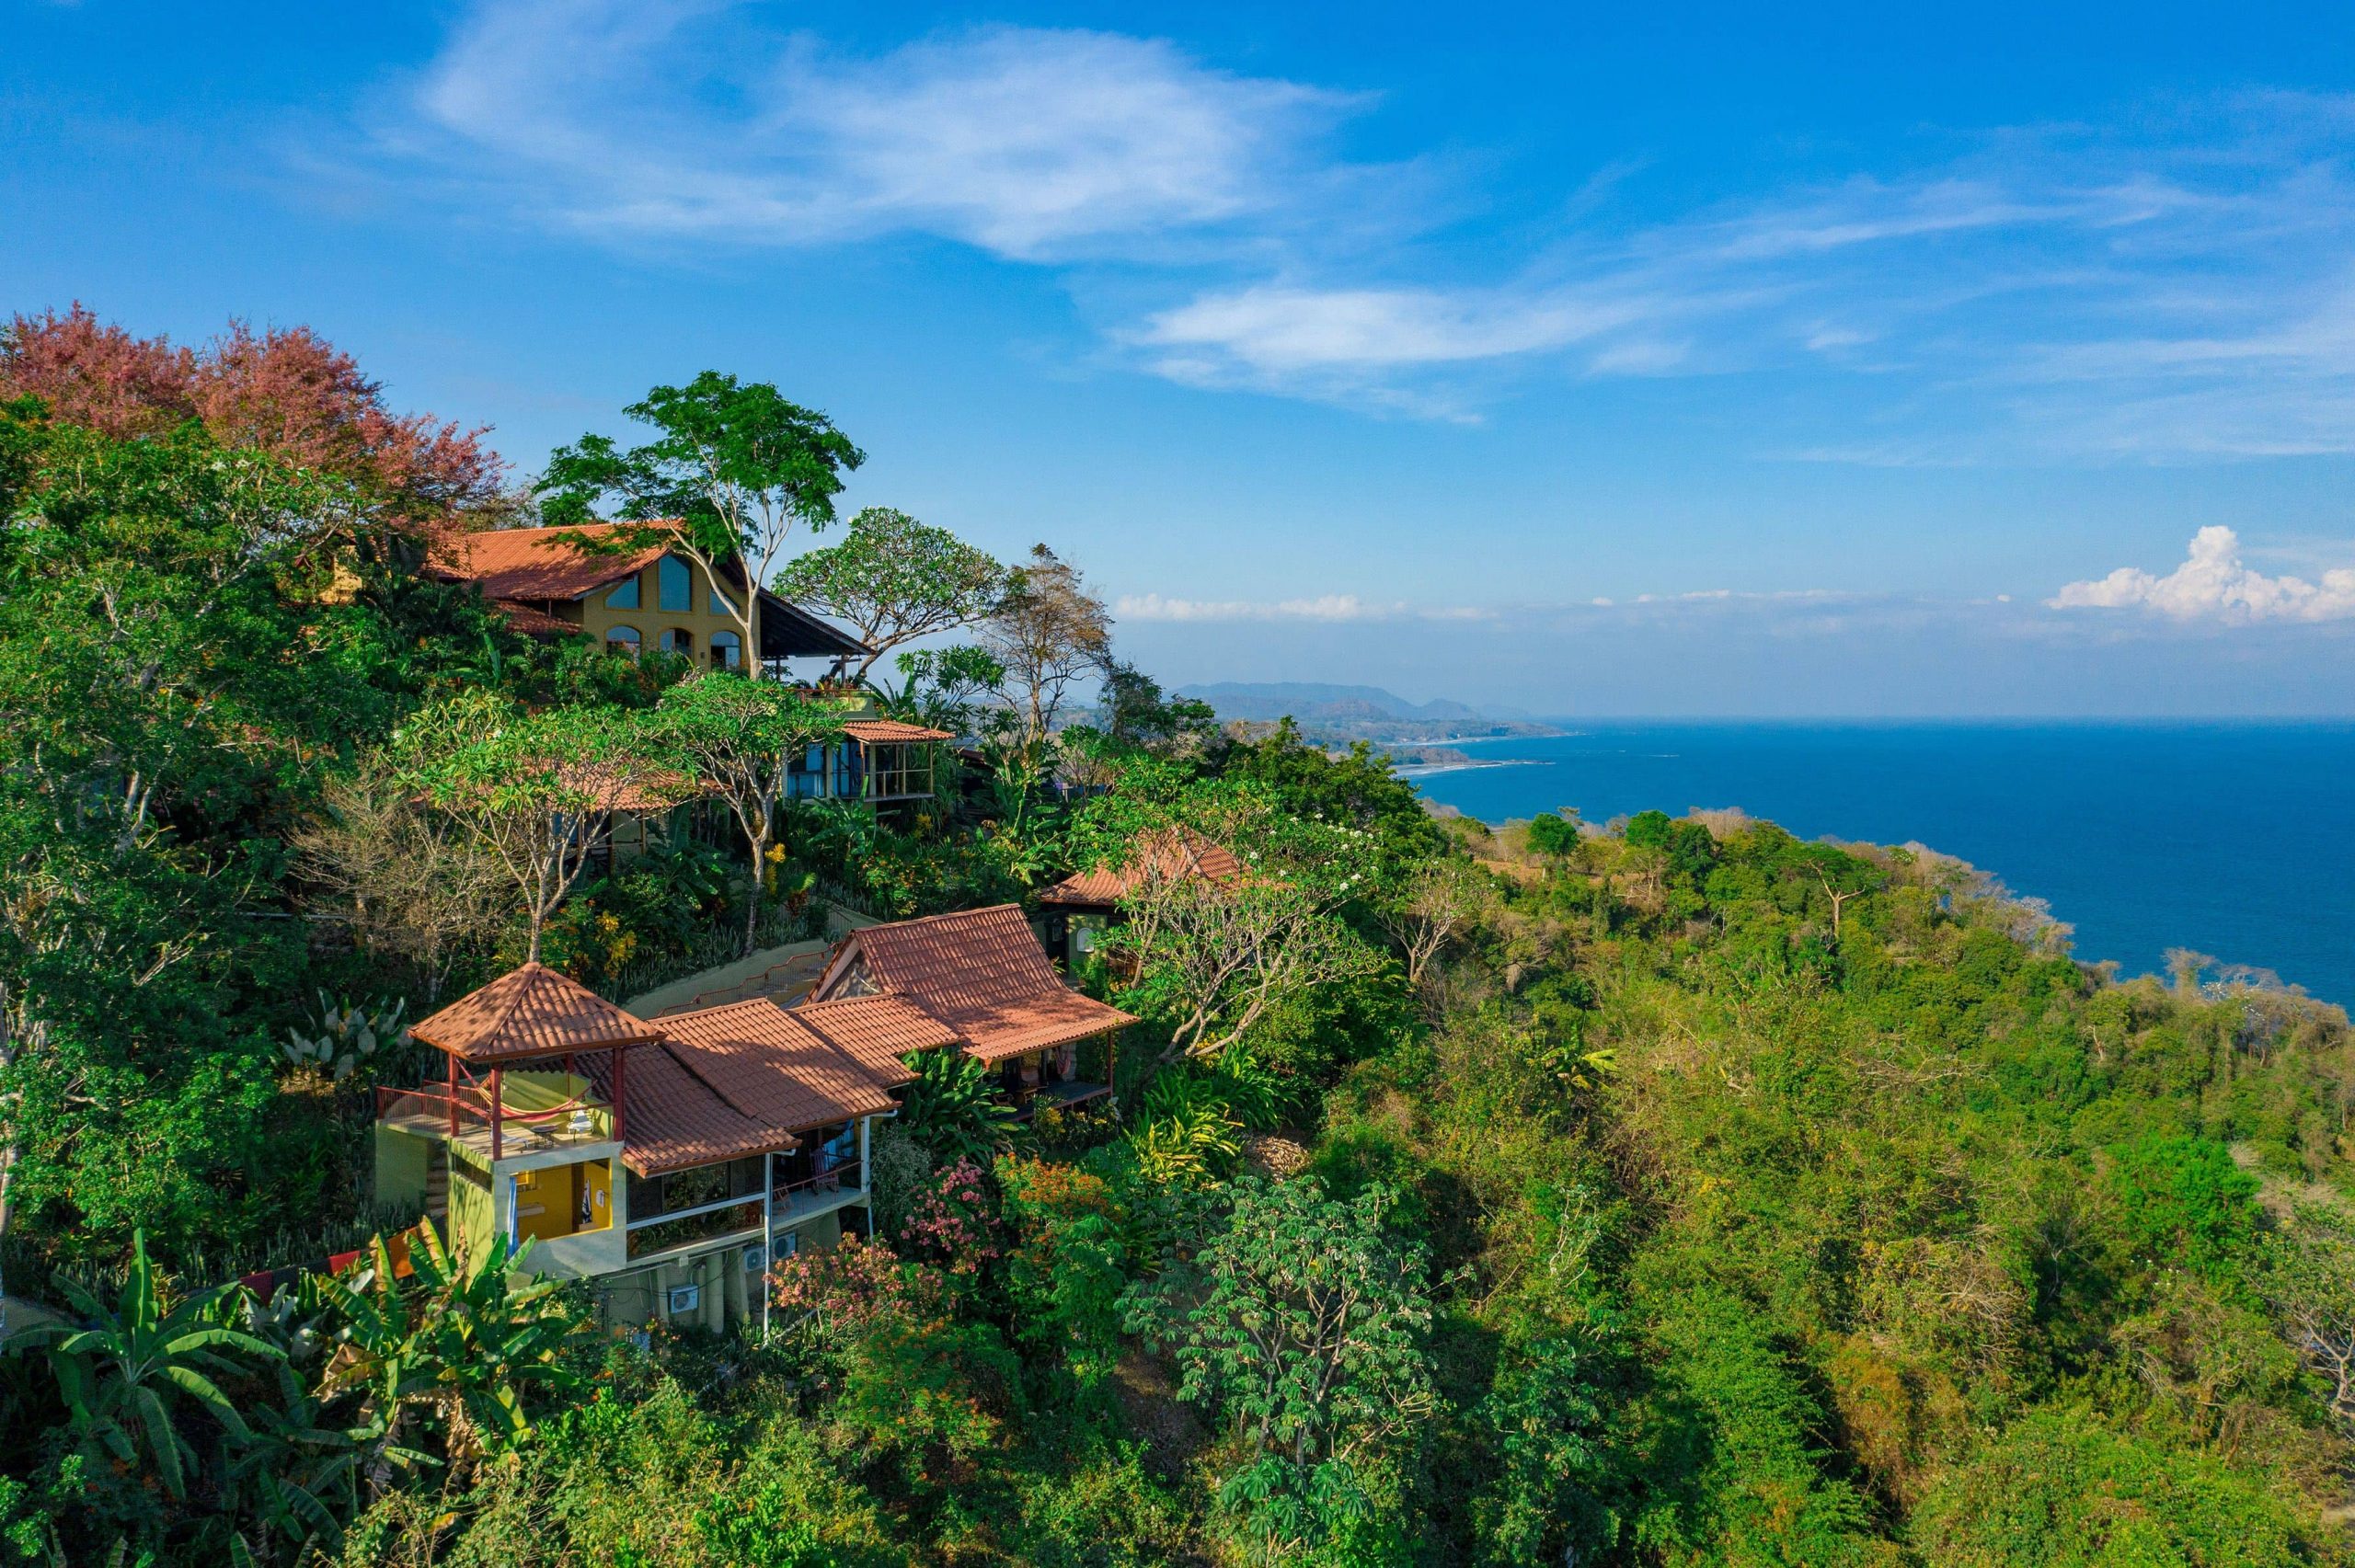 A beautiful birds eye view of the Anamaya Yoga Retreat resort properties amongst the Costa Rican jungle canopy and incredible bright blue seas.